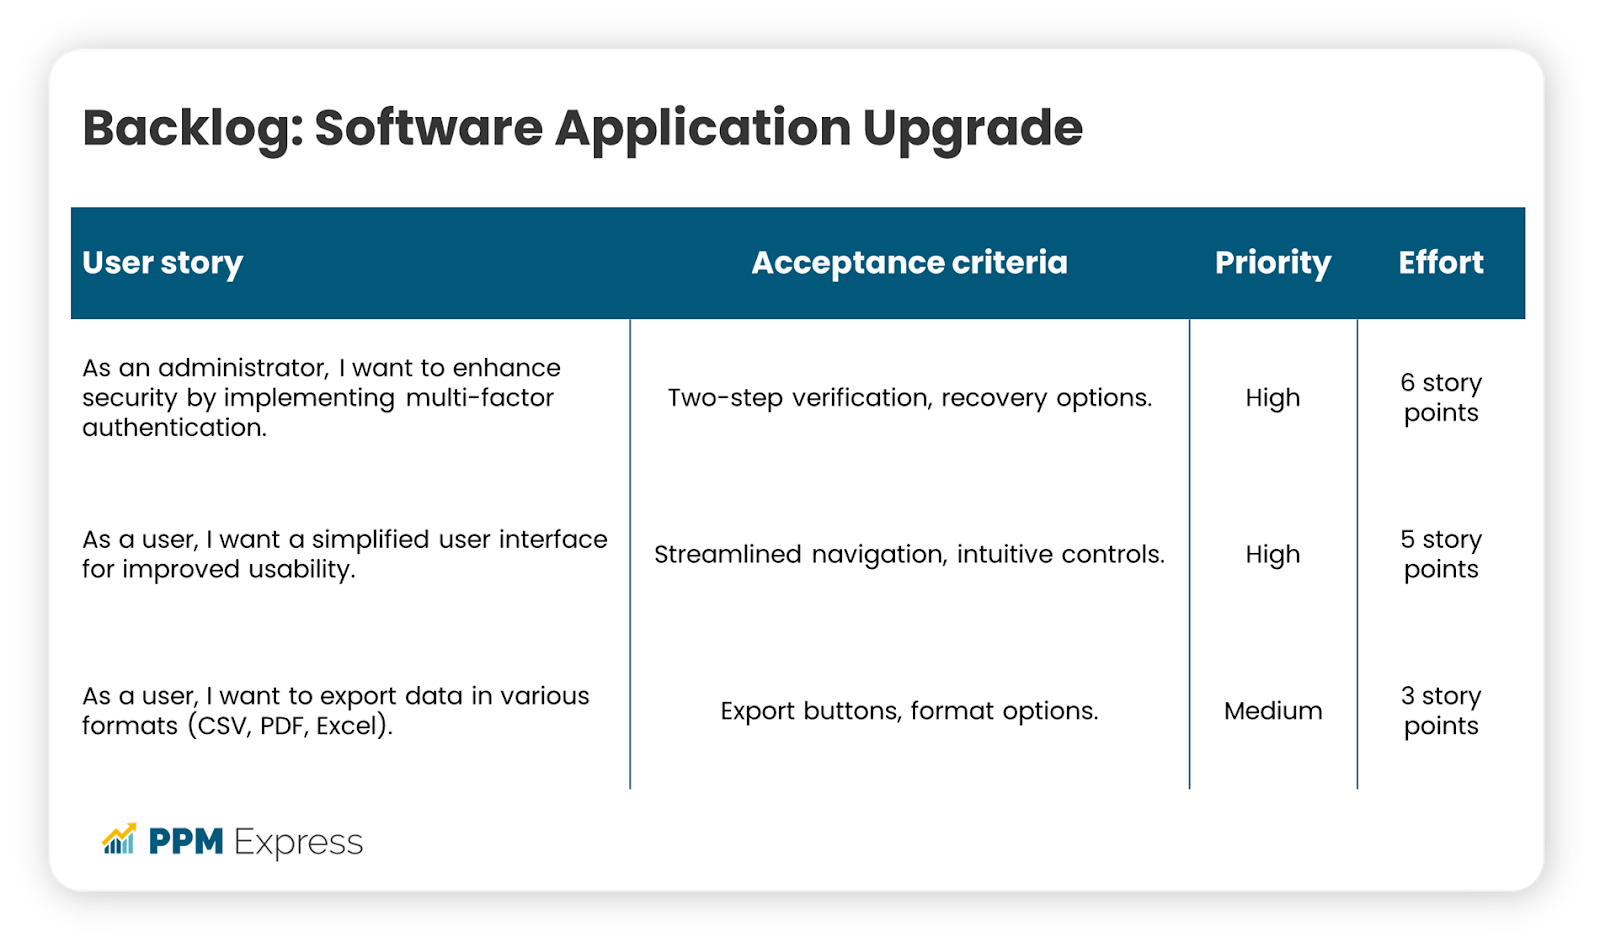 Backlog example based on software application upgrade